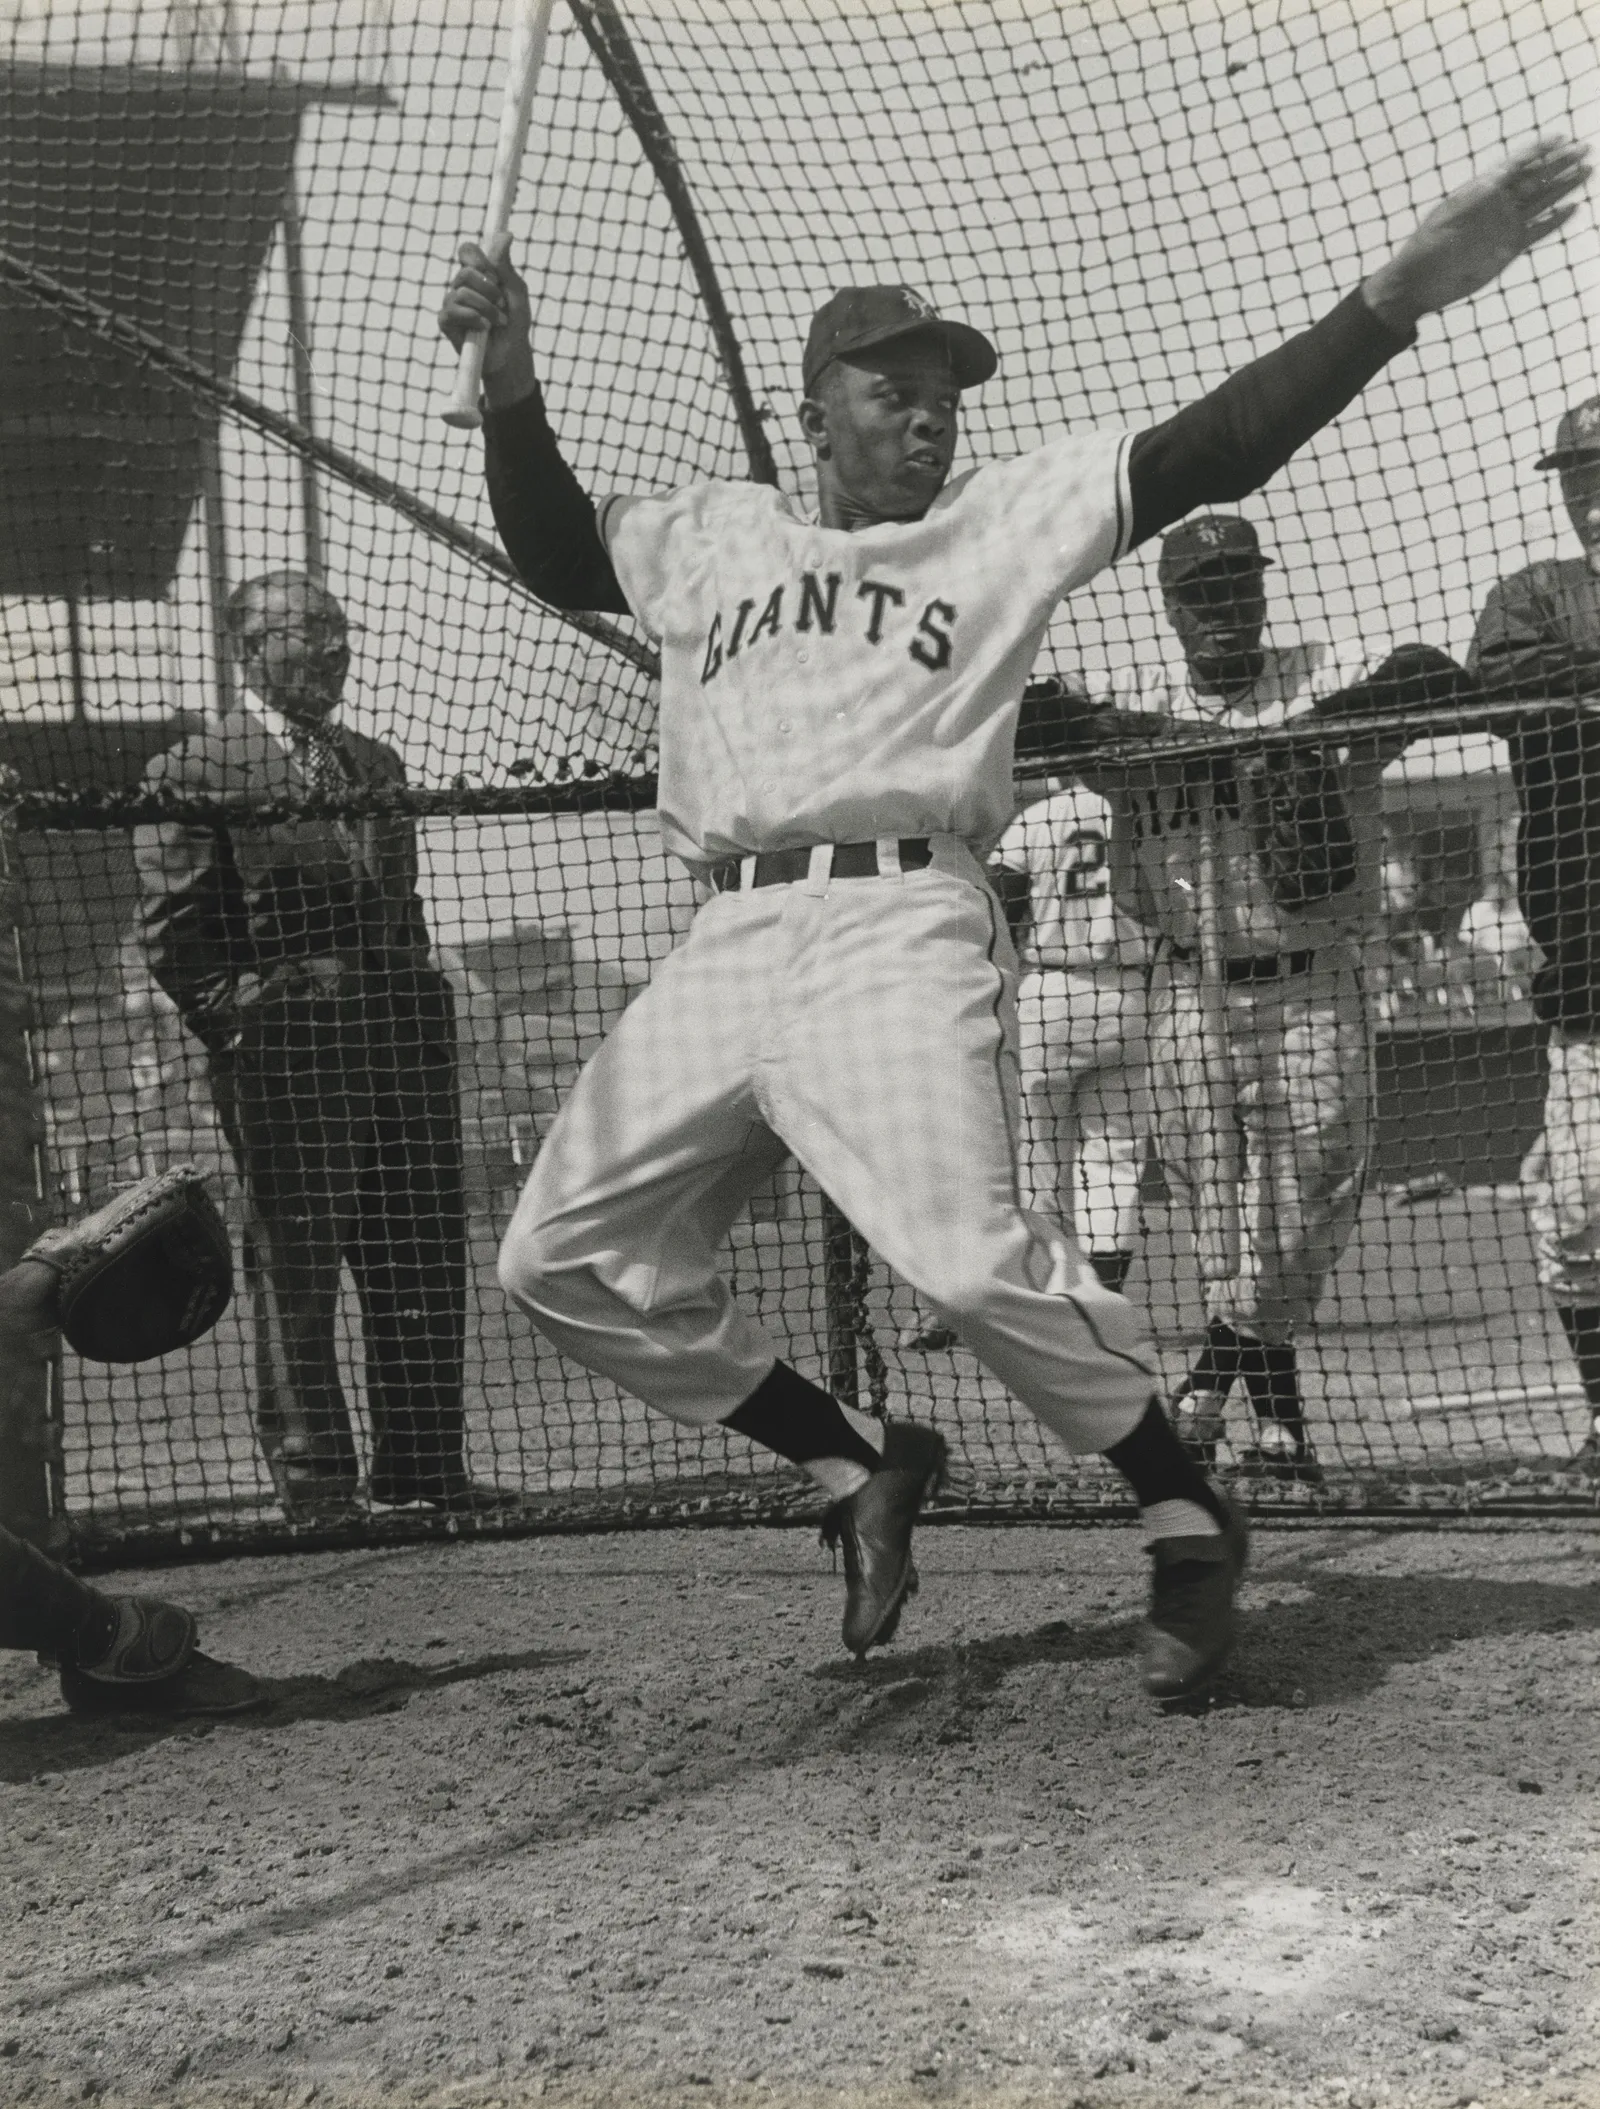 Willie Mays: African American baseball legend